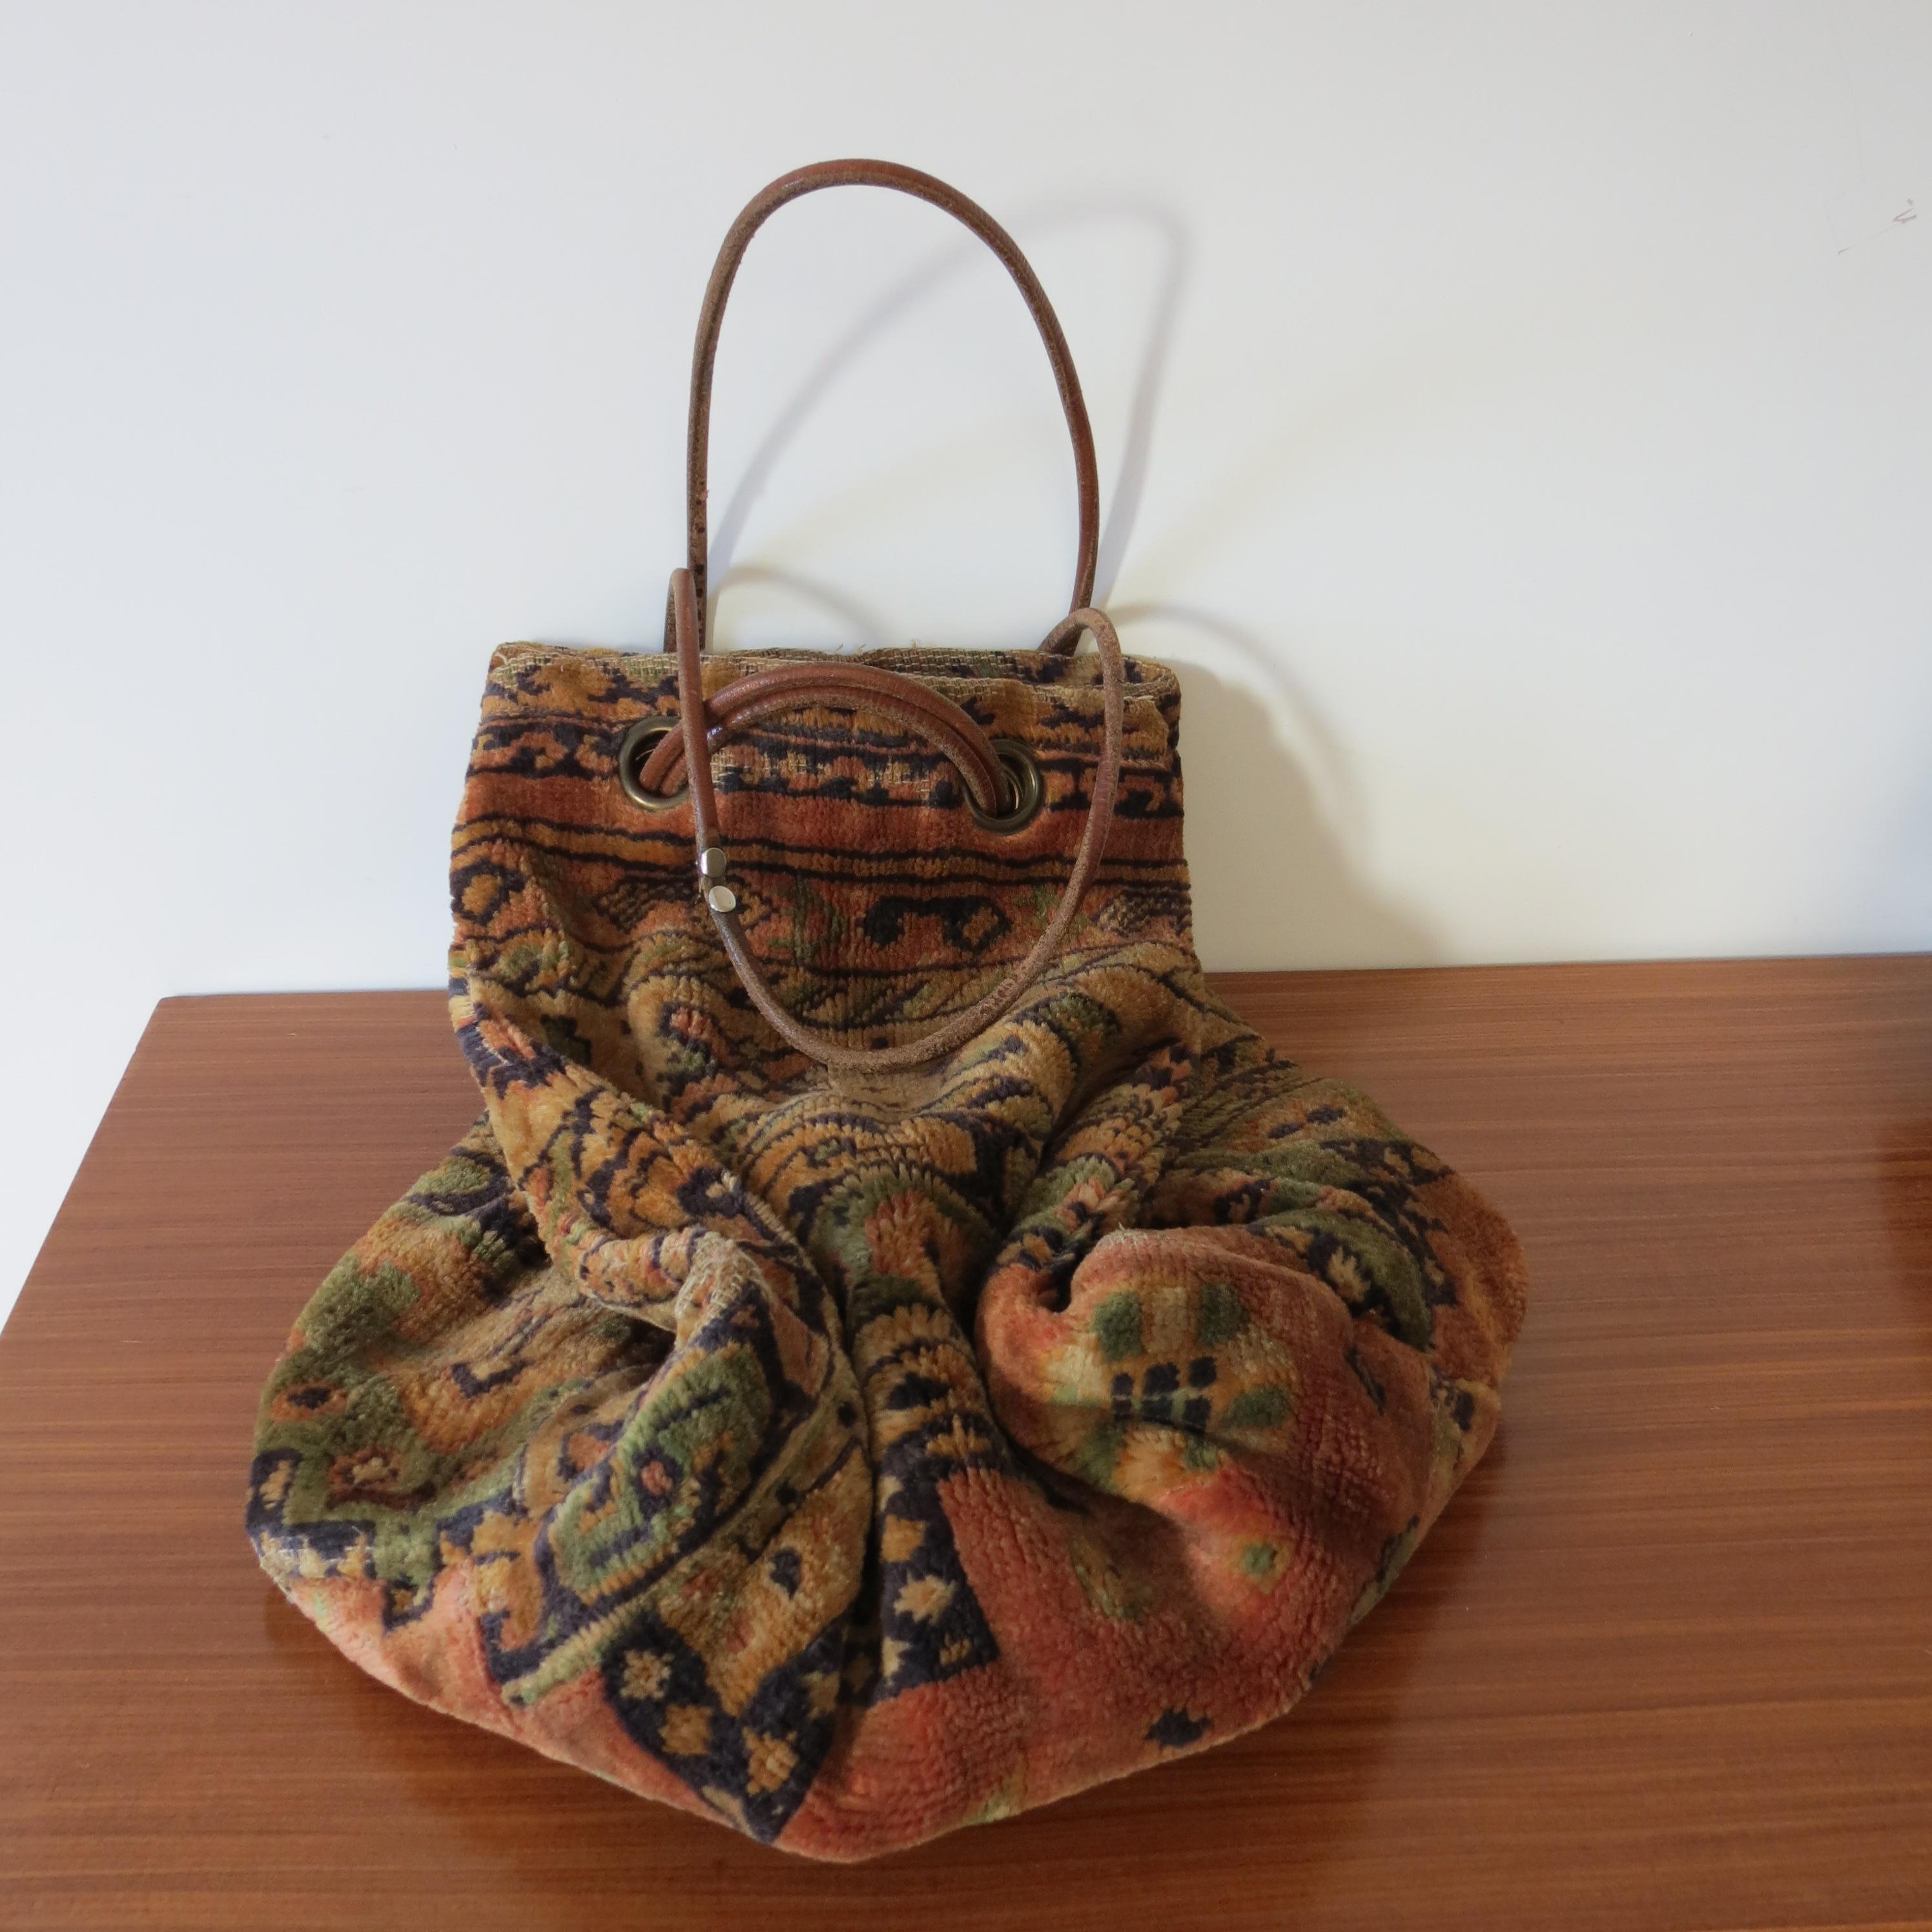 Rustic Original 1970s Vintage Carpet Bag Tapestry Bag by the Carpet Bag Company